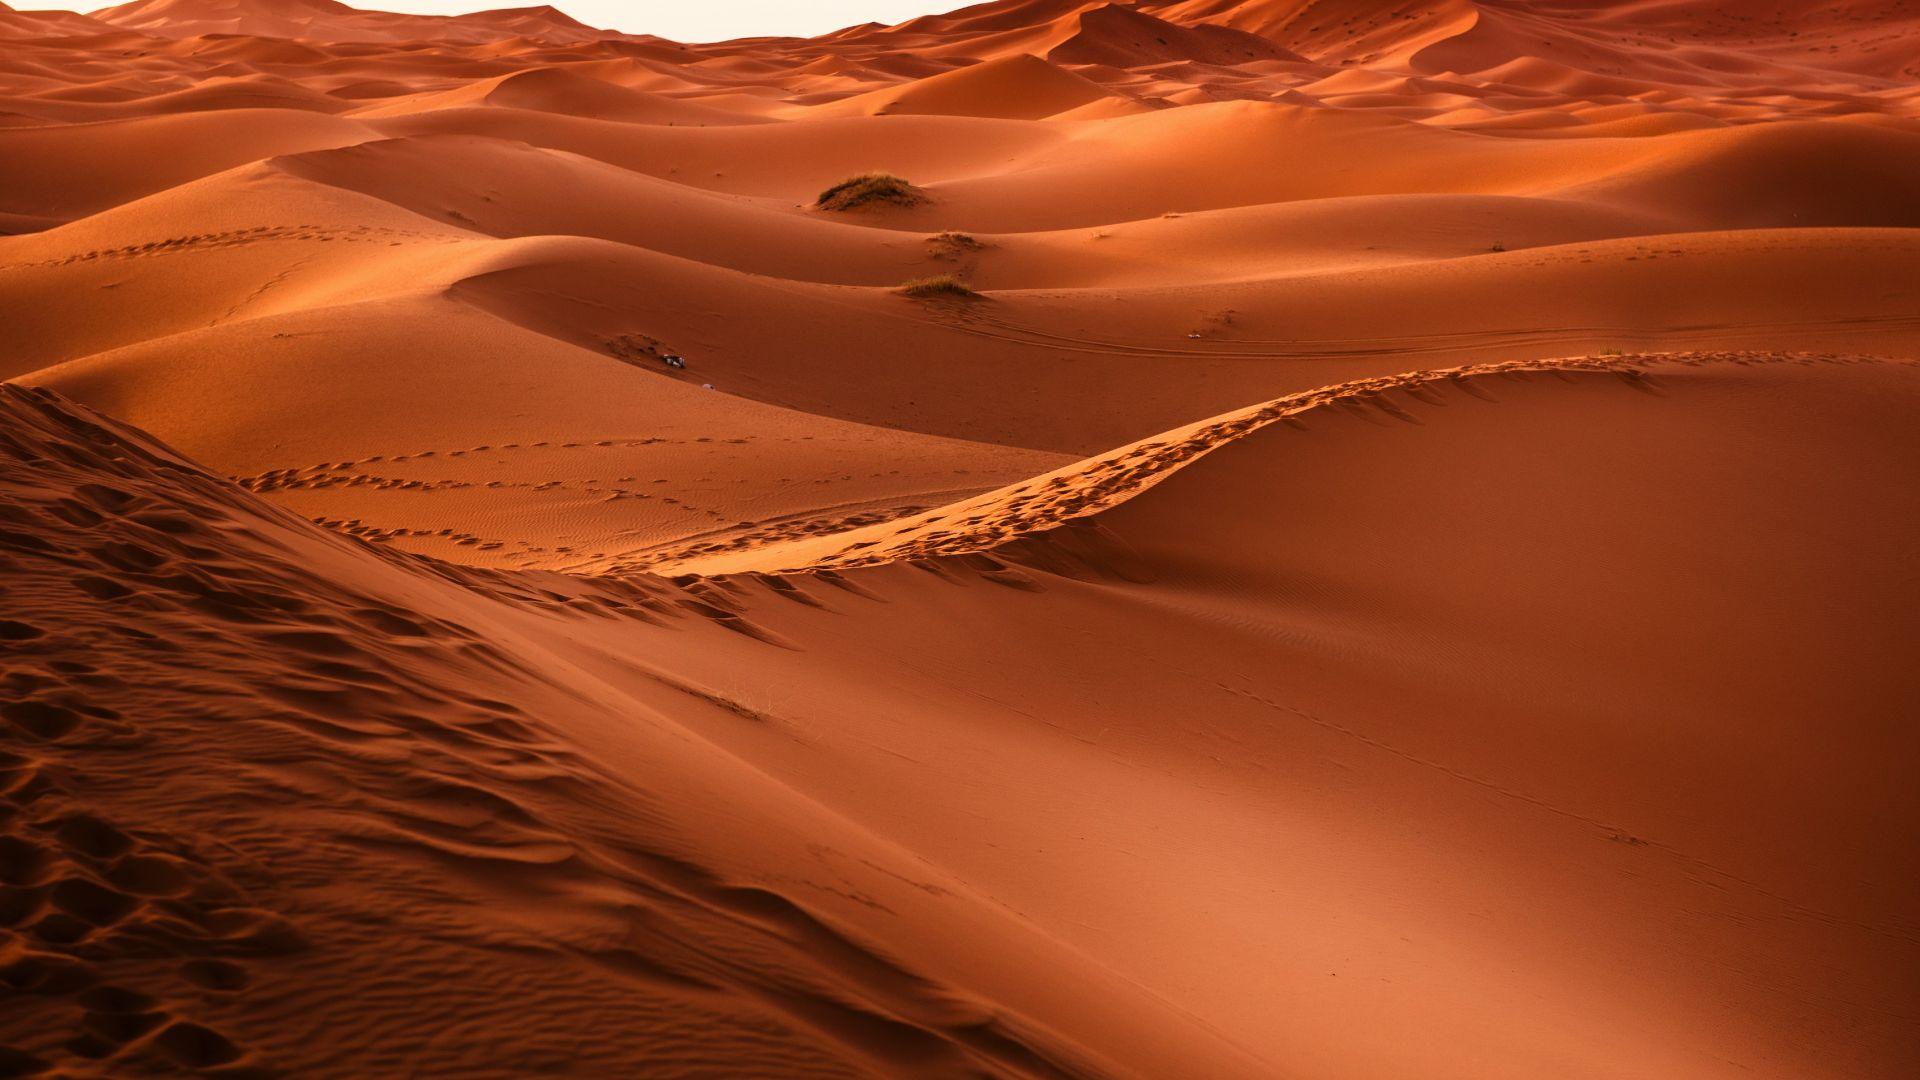 1920x1080 Desktop Wallpaper Morocco, Desert, Sand, Dunes, 5k, Hd Image, Picture, Background, 2b2710